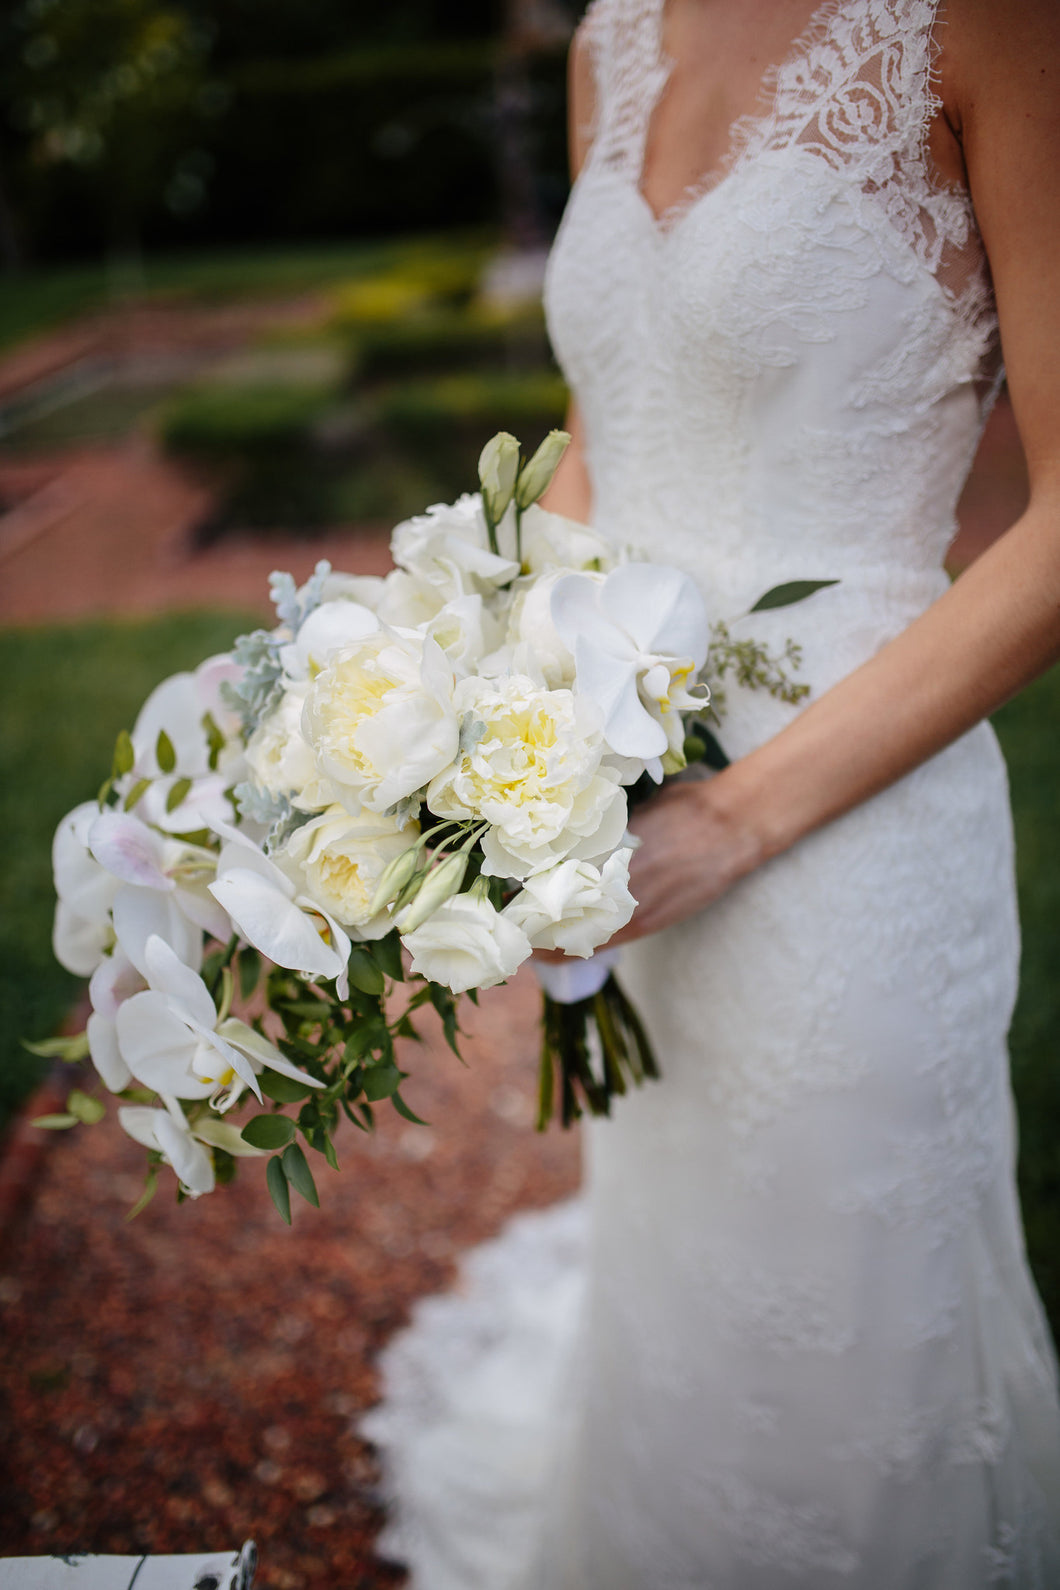 Carolina Herrera 'Daisy' size 2 used wedding dress front view on bride